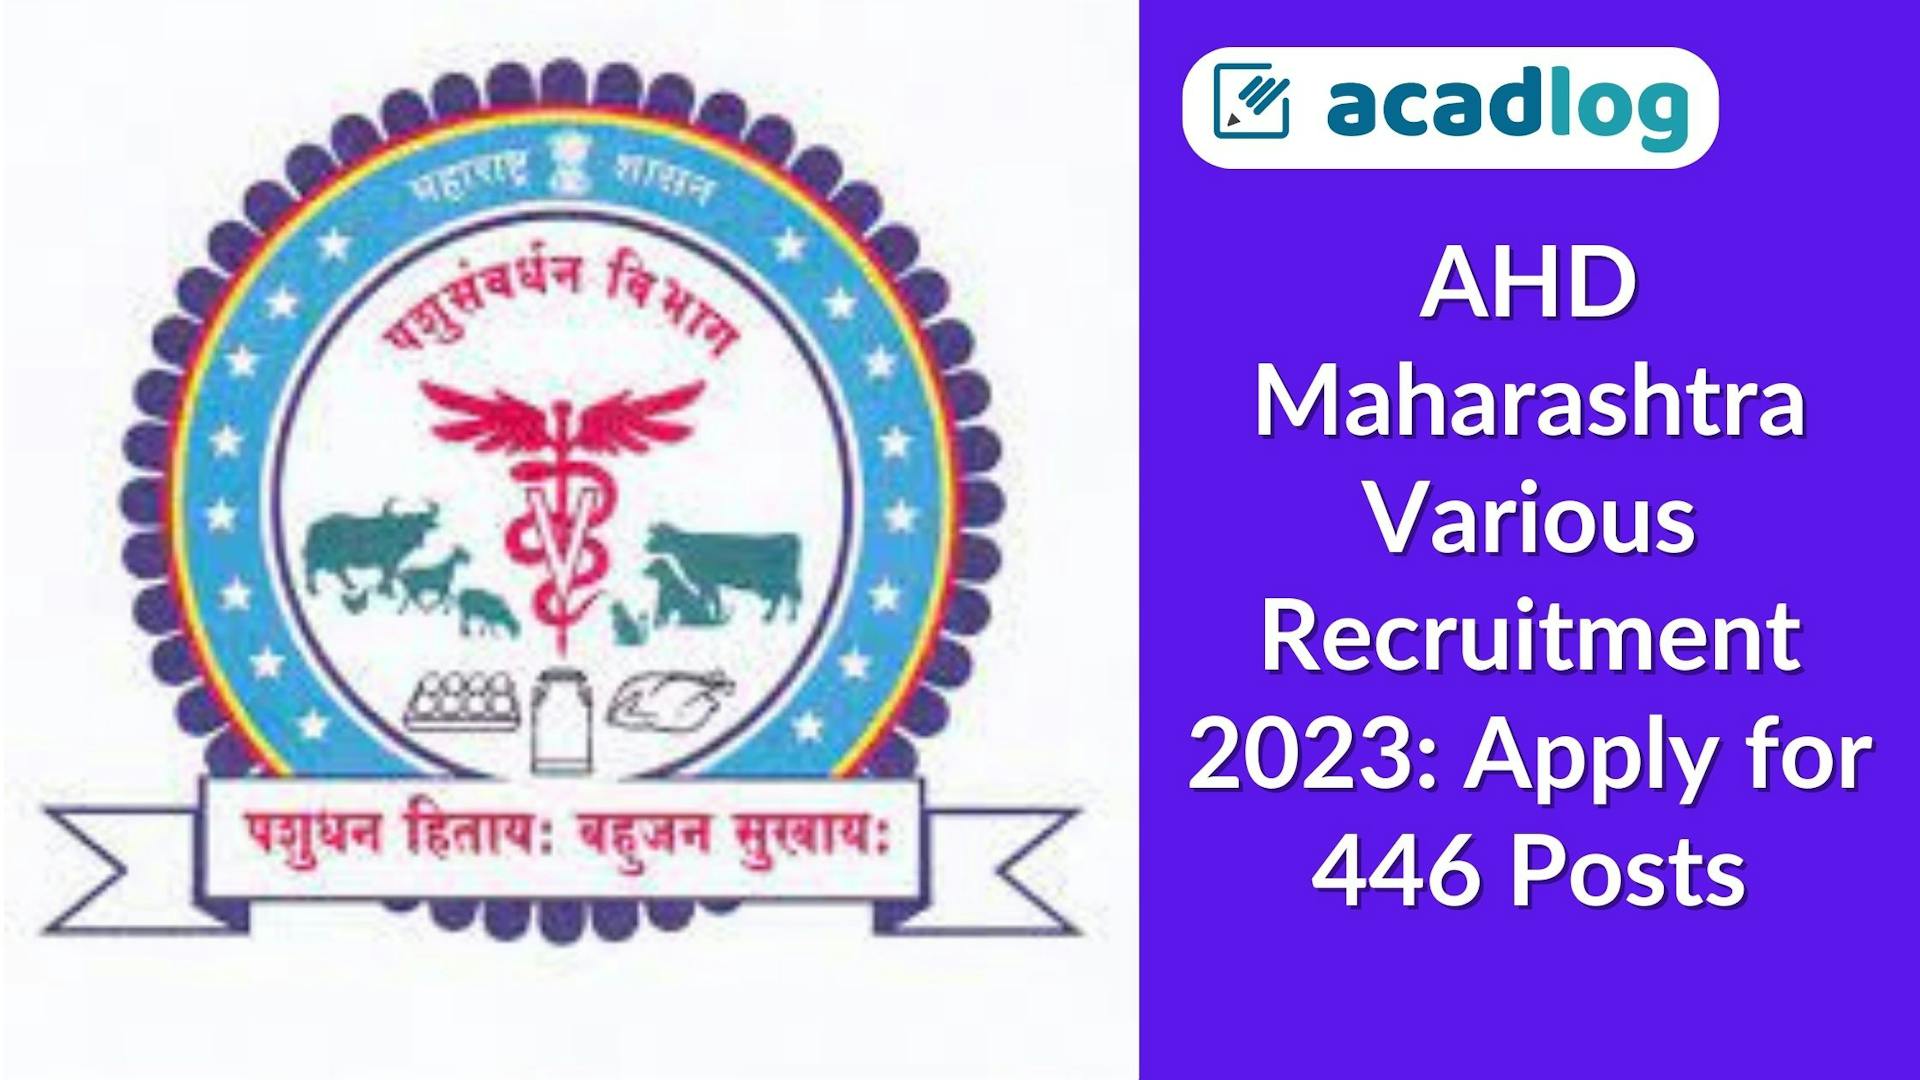 AHD Maharashtra Various Recruitment 2023: Apply for 446 Posts